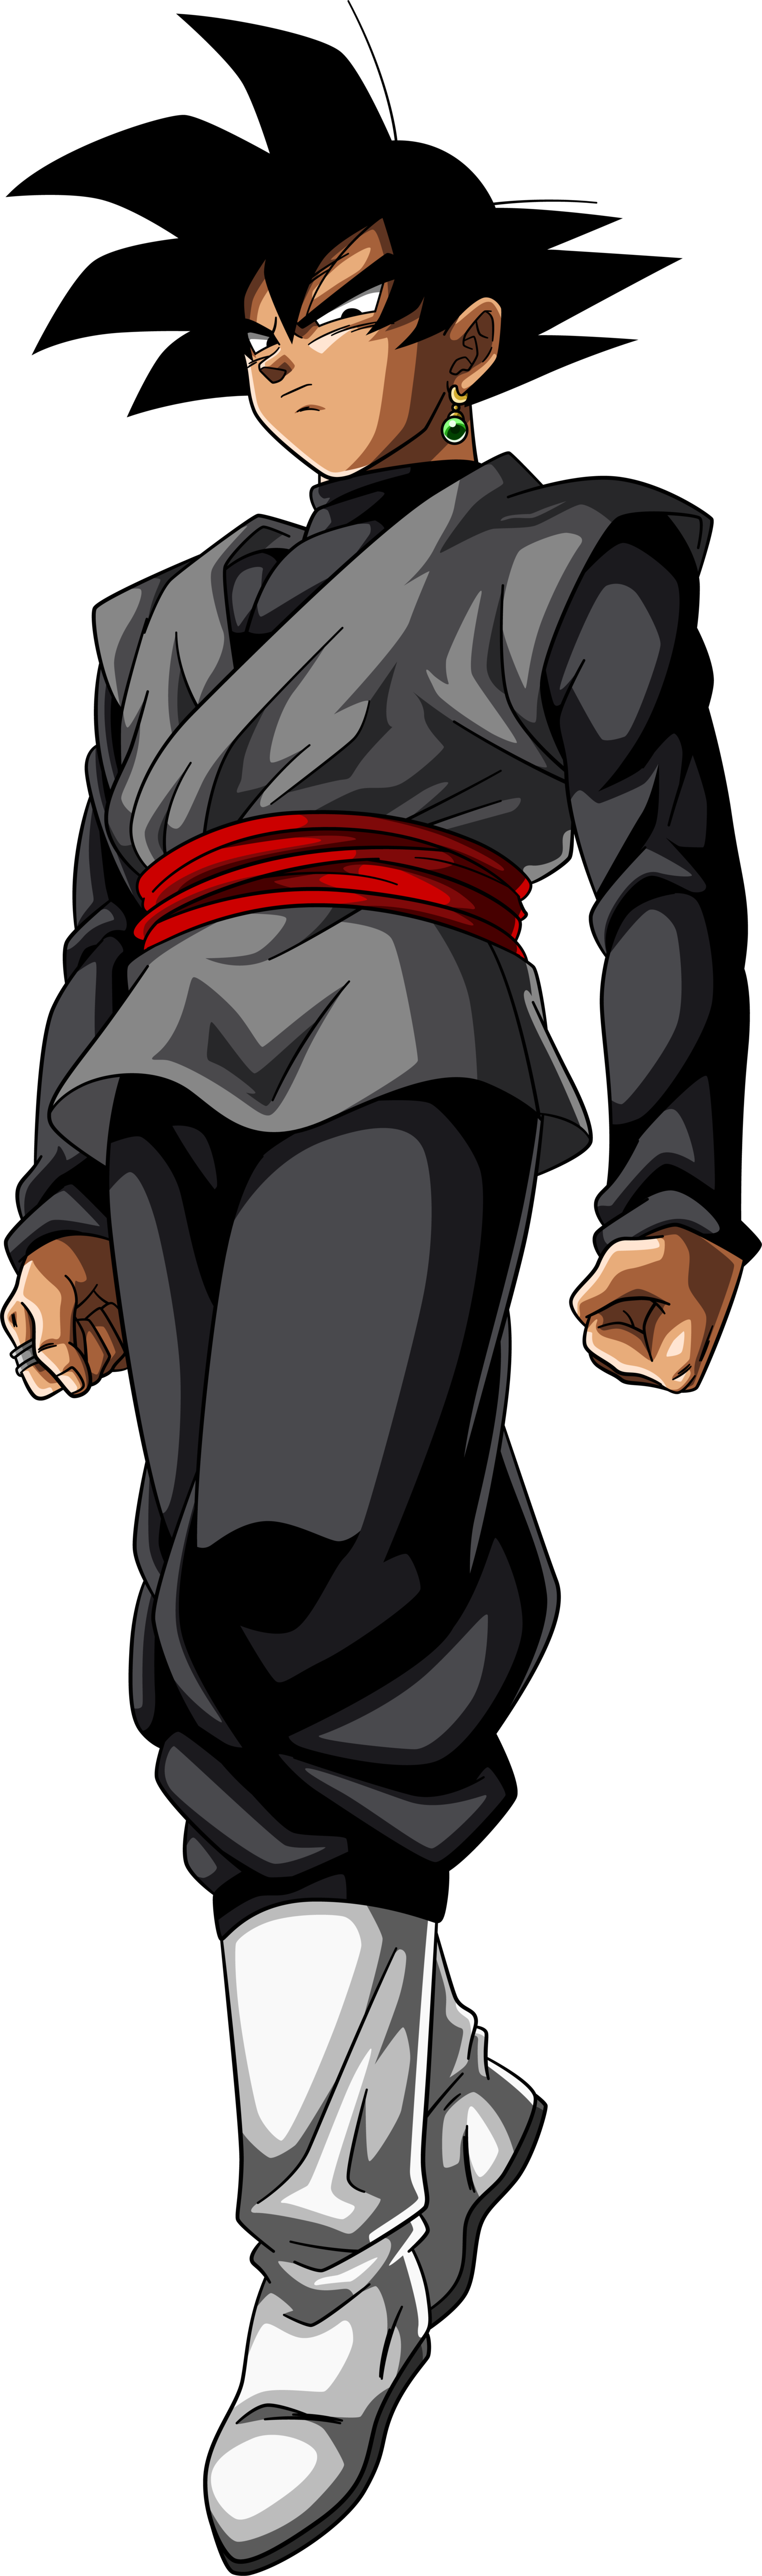 Goku Black - Goku Black | Anime-Planet : Episode 63 goku black vs vegeta!